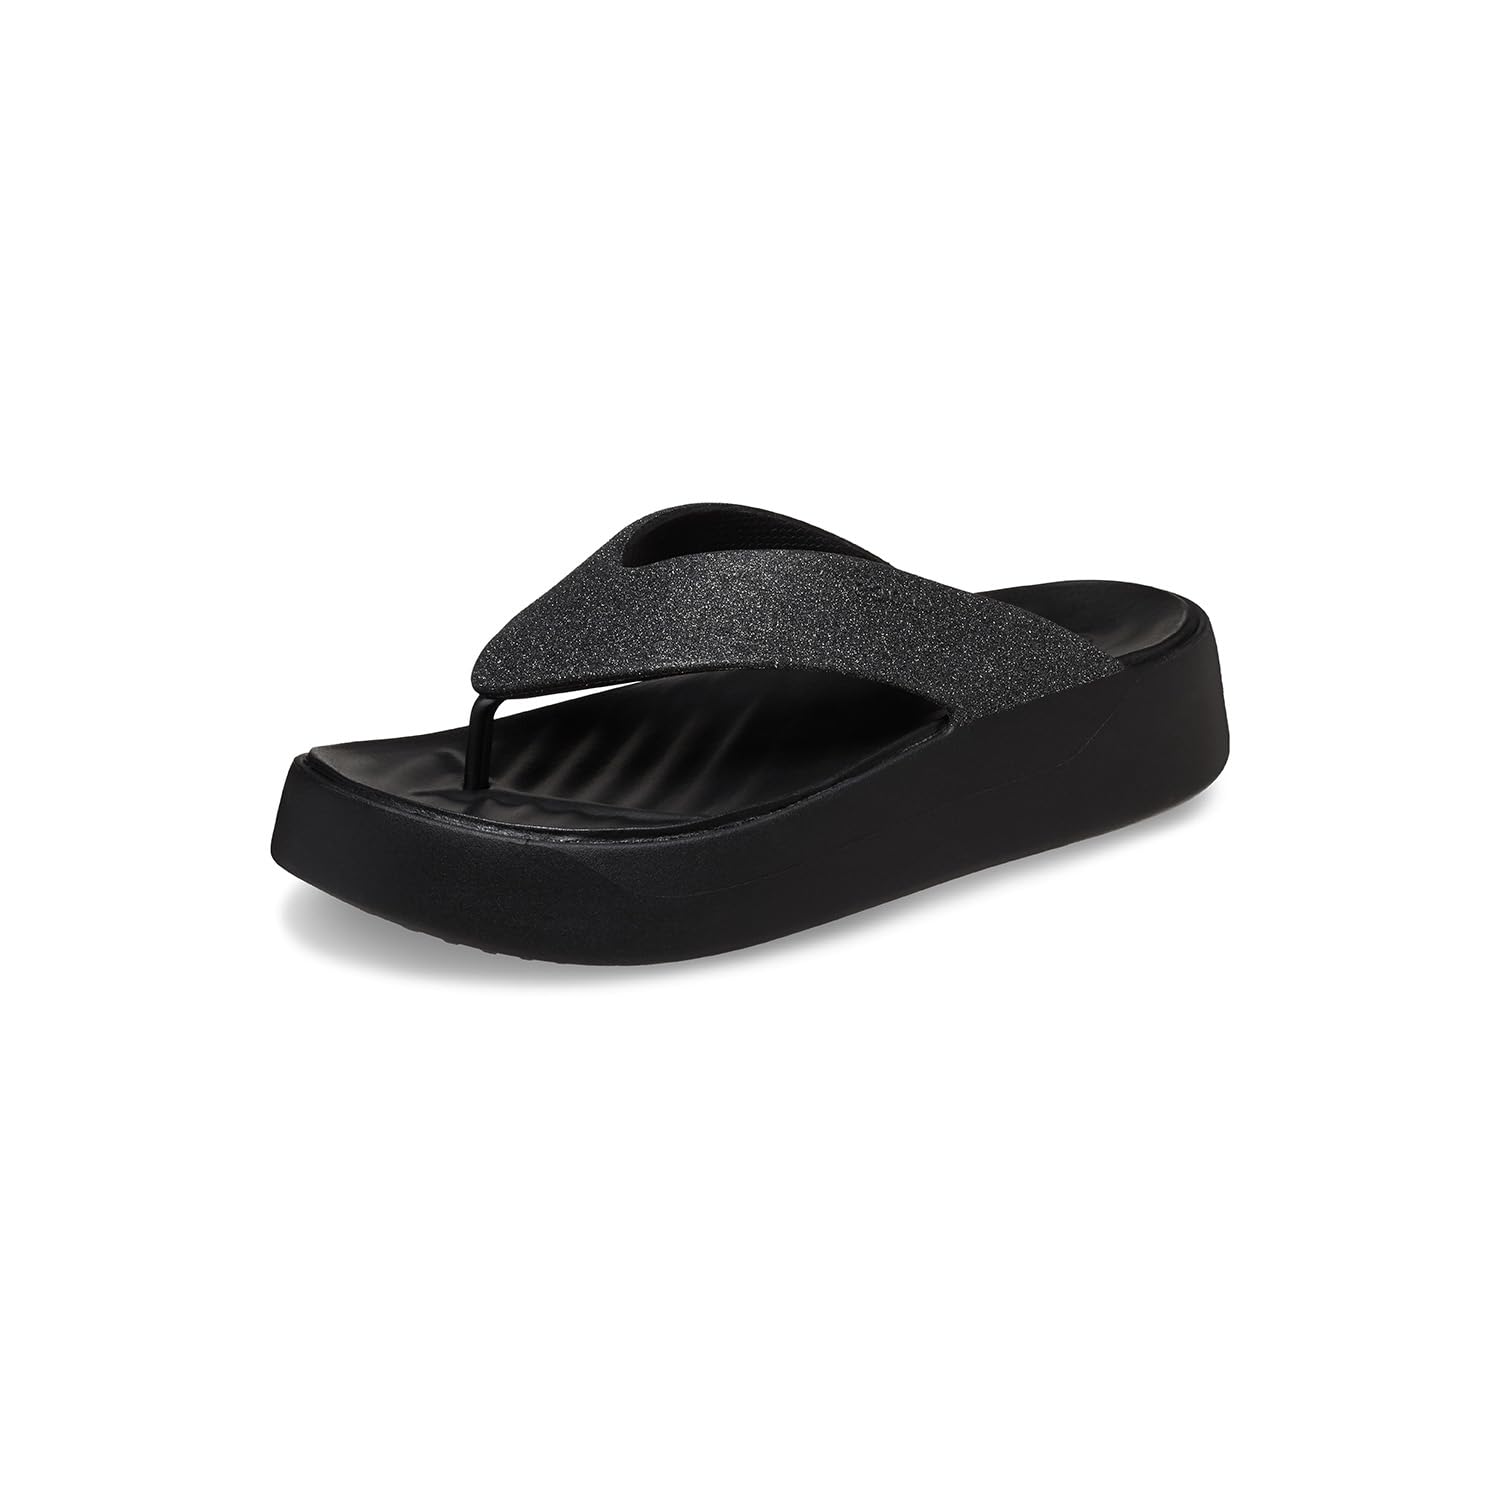 Crocs Women Getaway Platform Flip Flops, Wedge Sandals for Women, Black Glitter, 6 Women